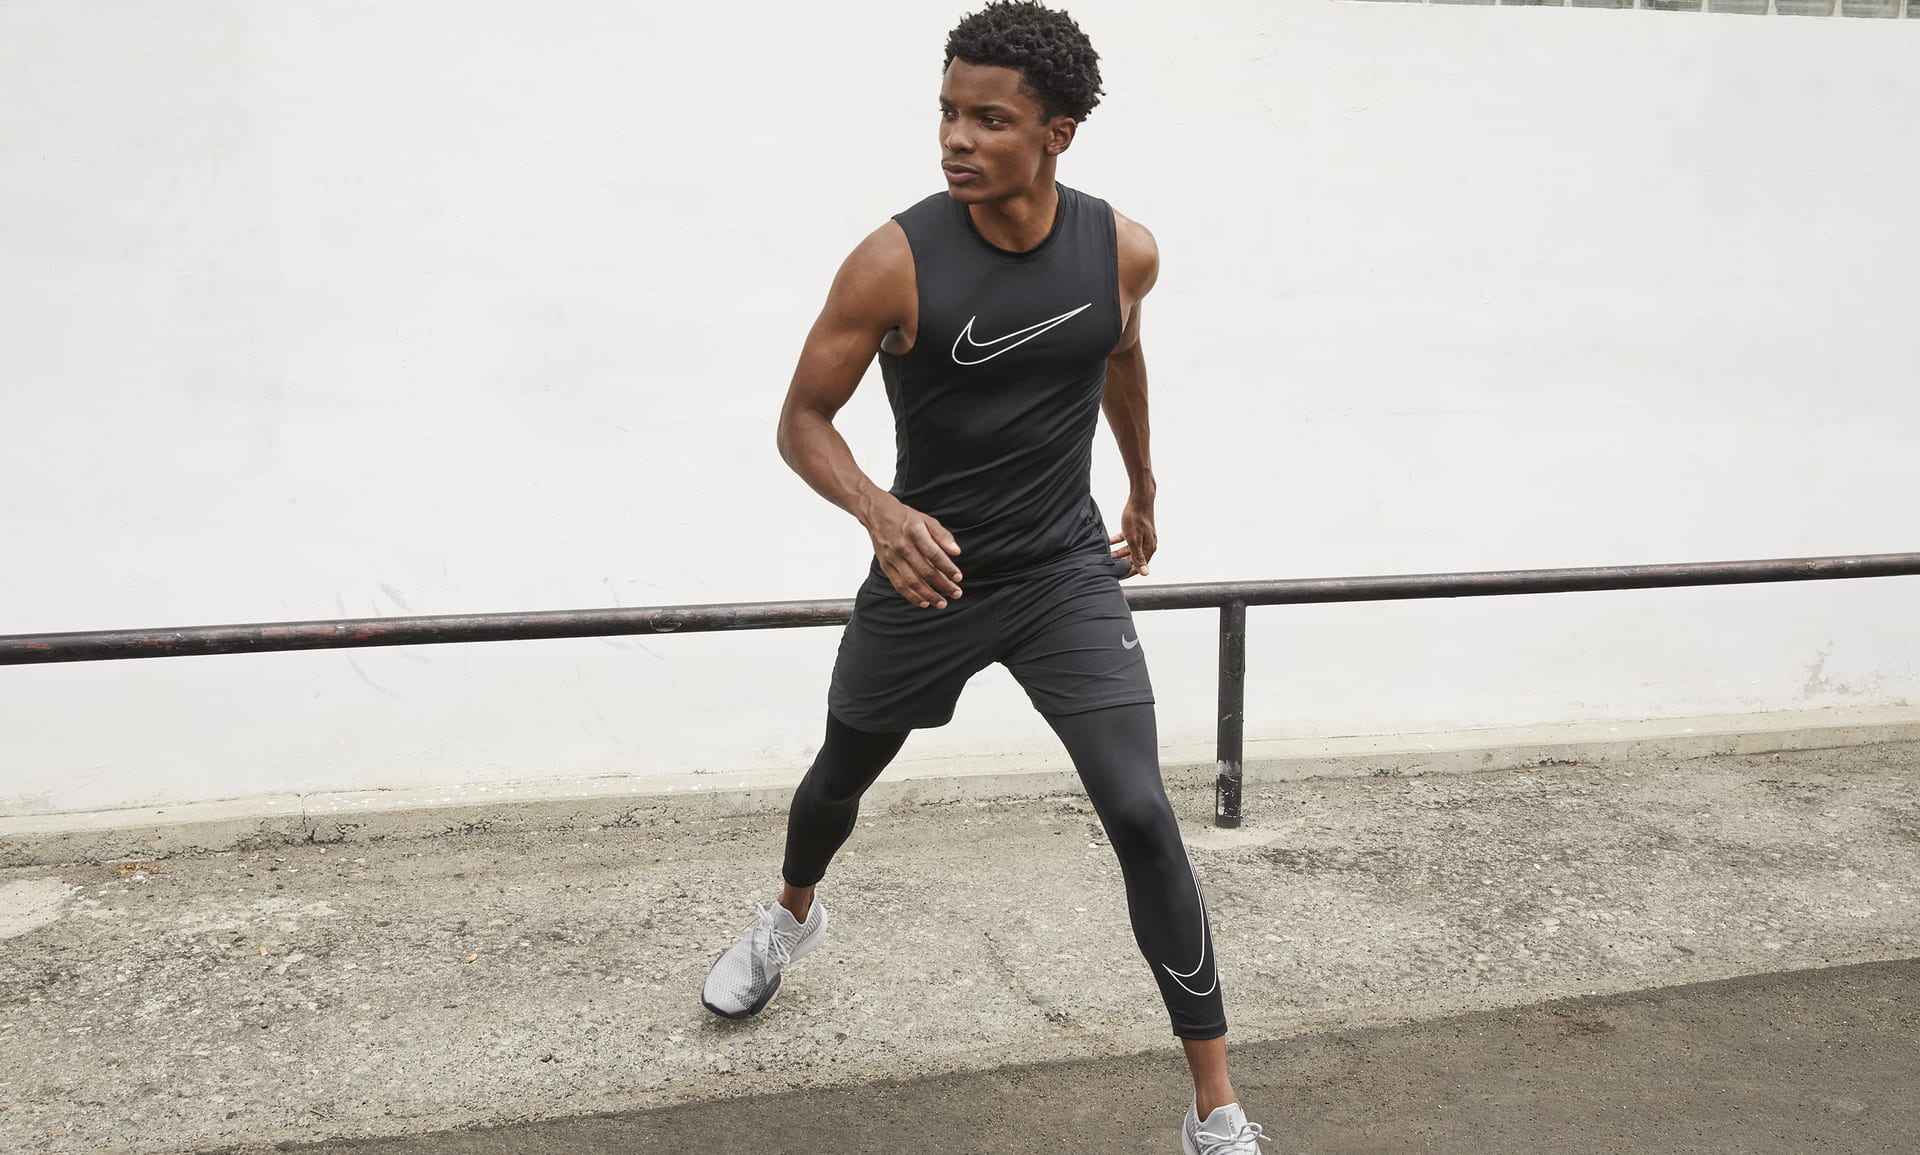 Nike Pro Dri-FIT Men's Tight-Fit Sleeveless Top. Nike IN